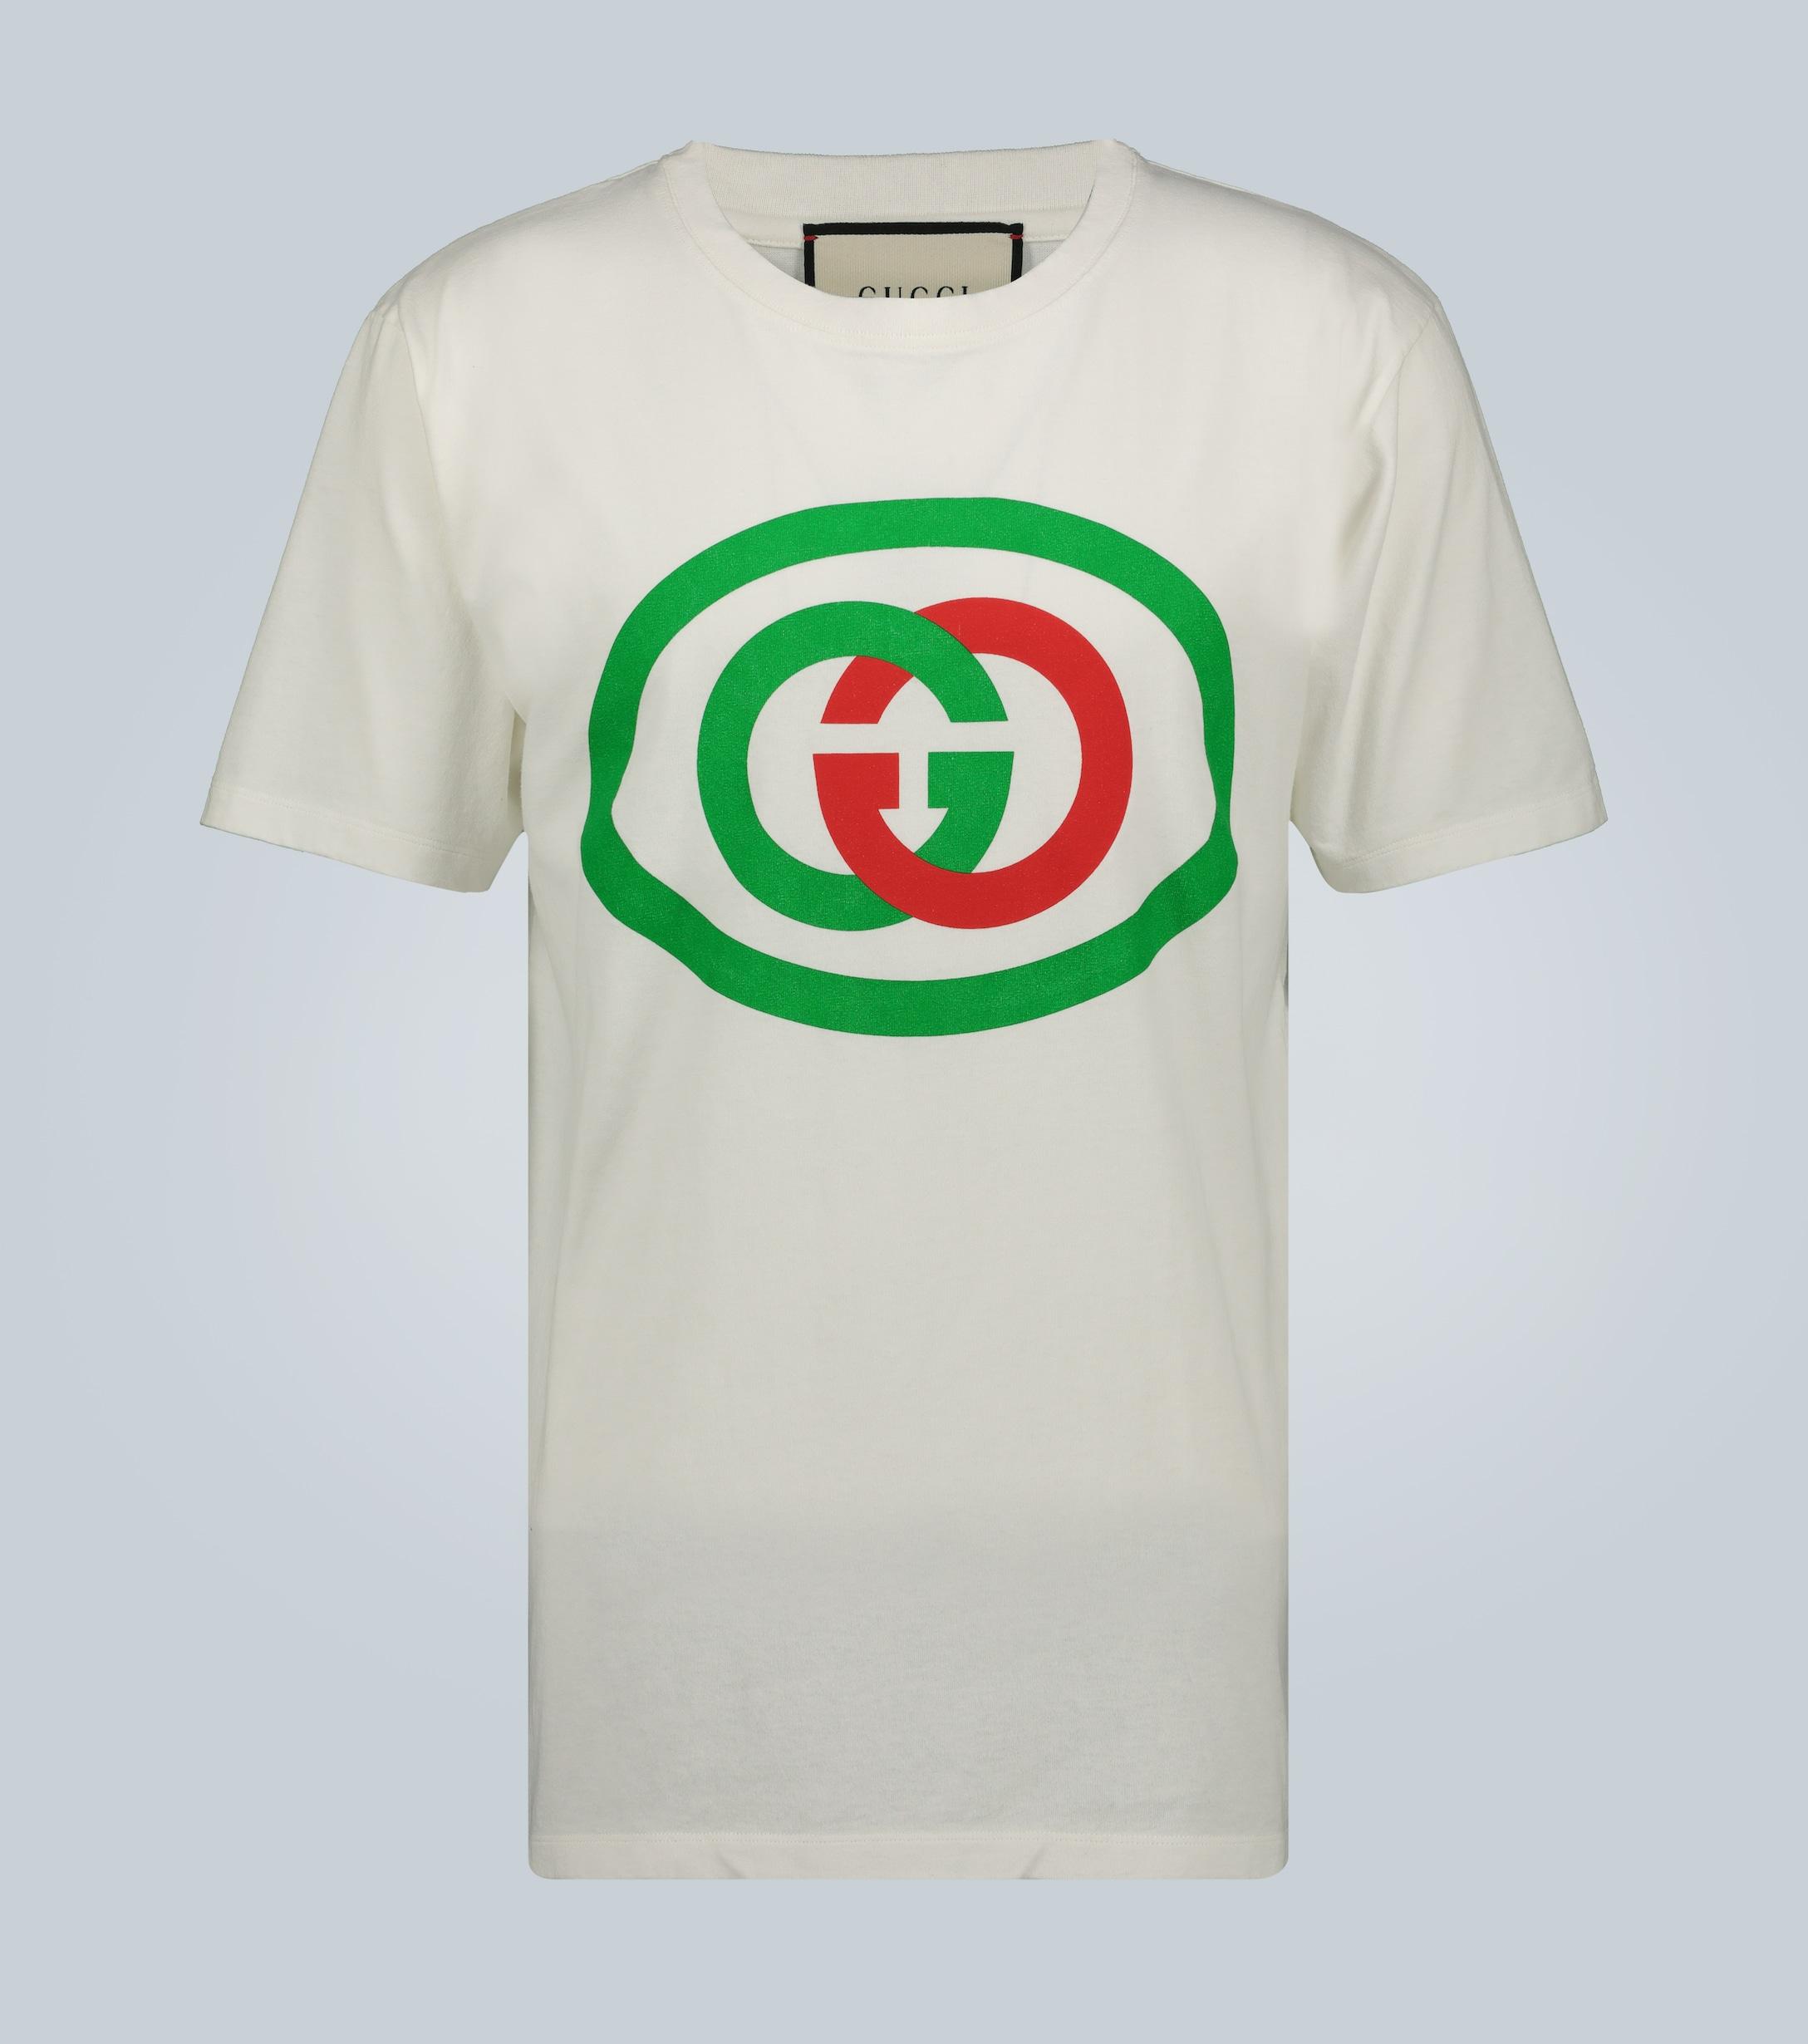 Gucci Gg Interlock Logo Printed Cotton T-shirt in White for Men - Lyst